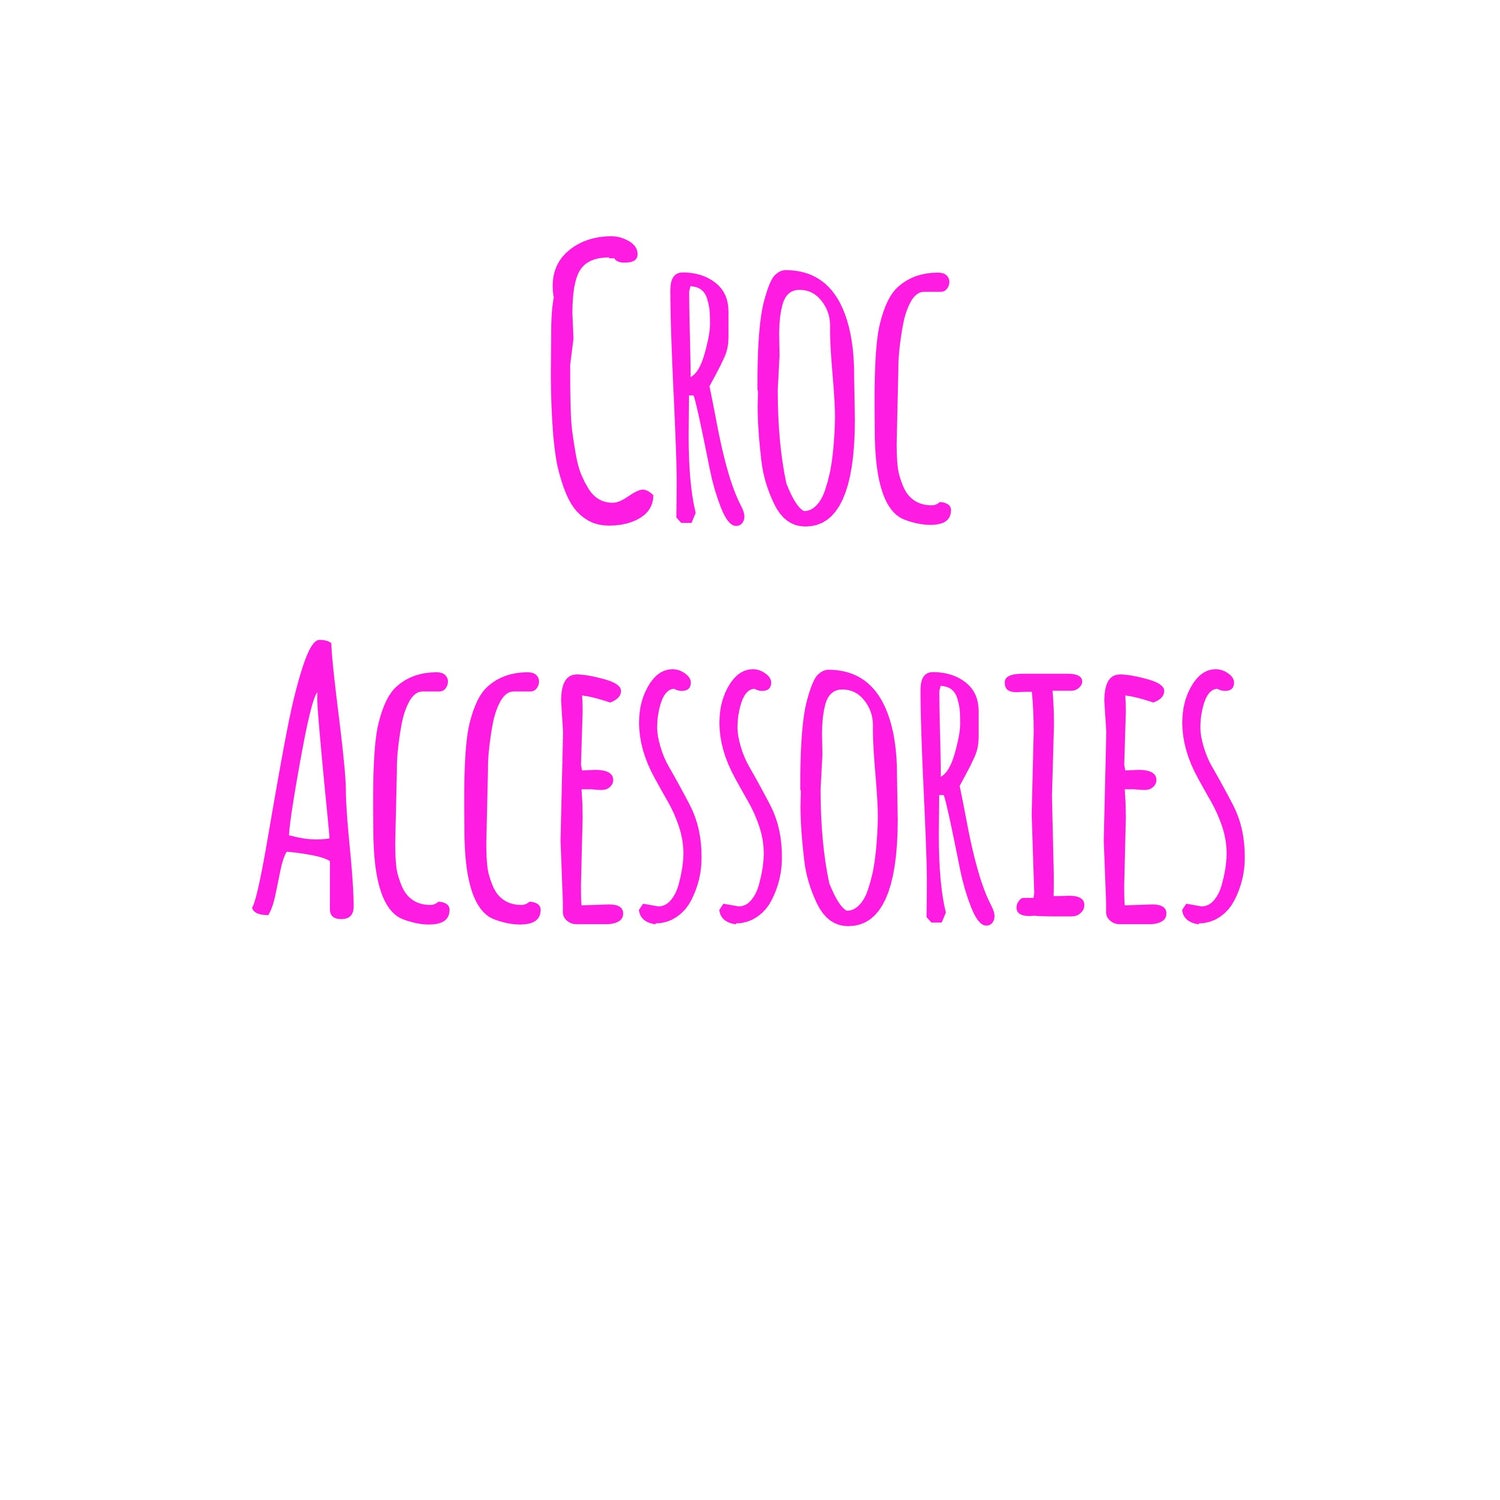 Croc accessories